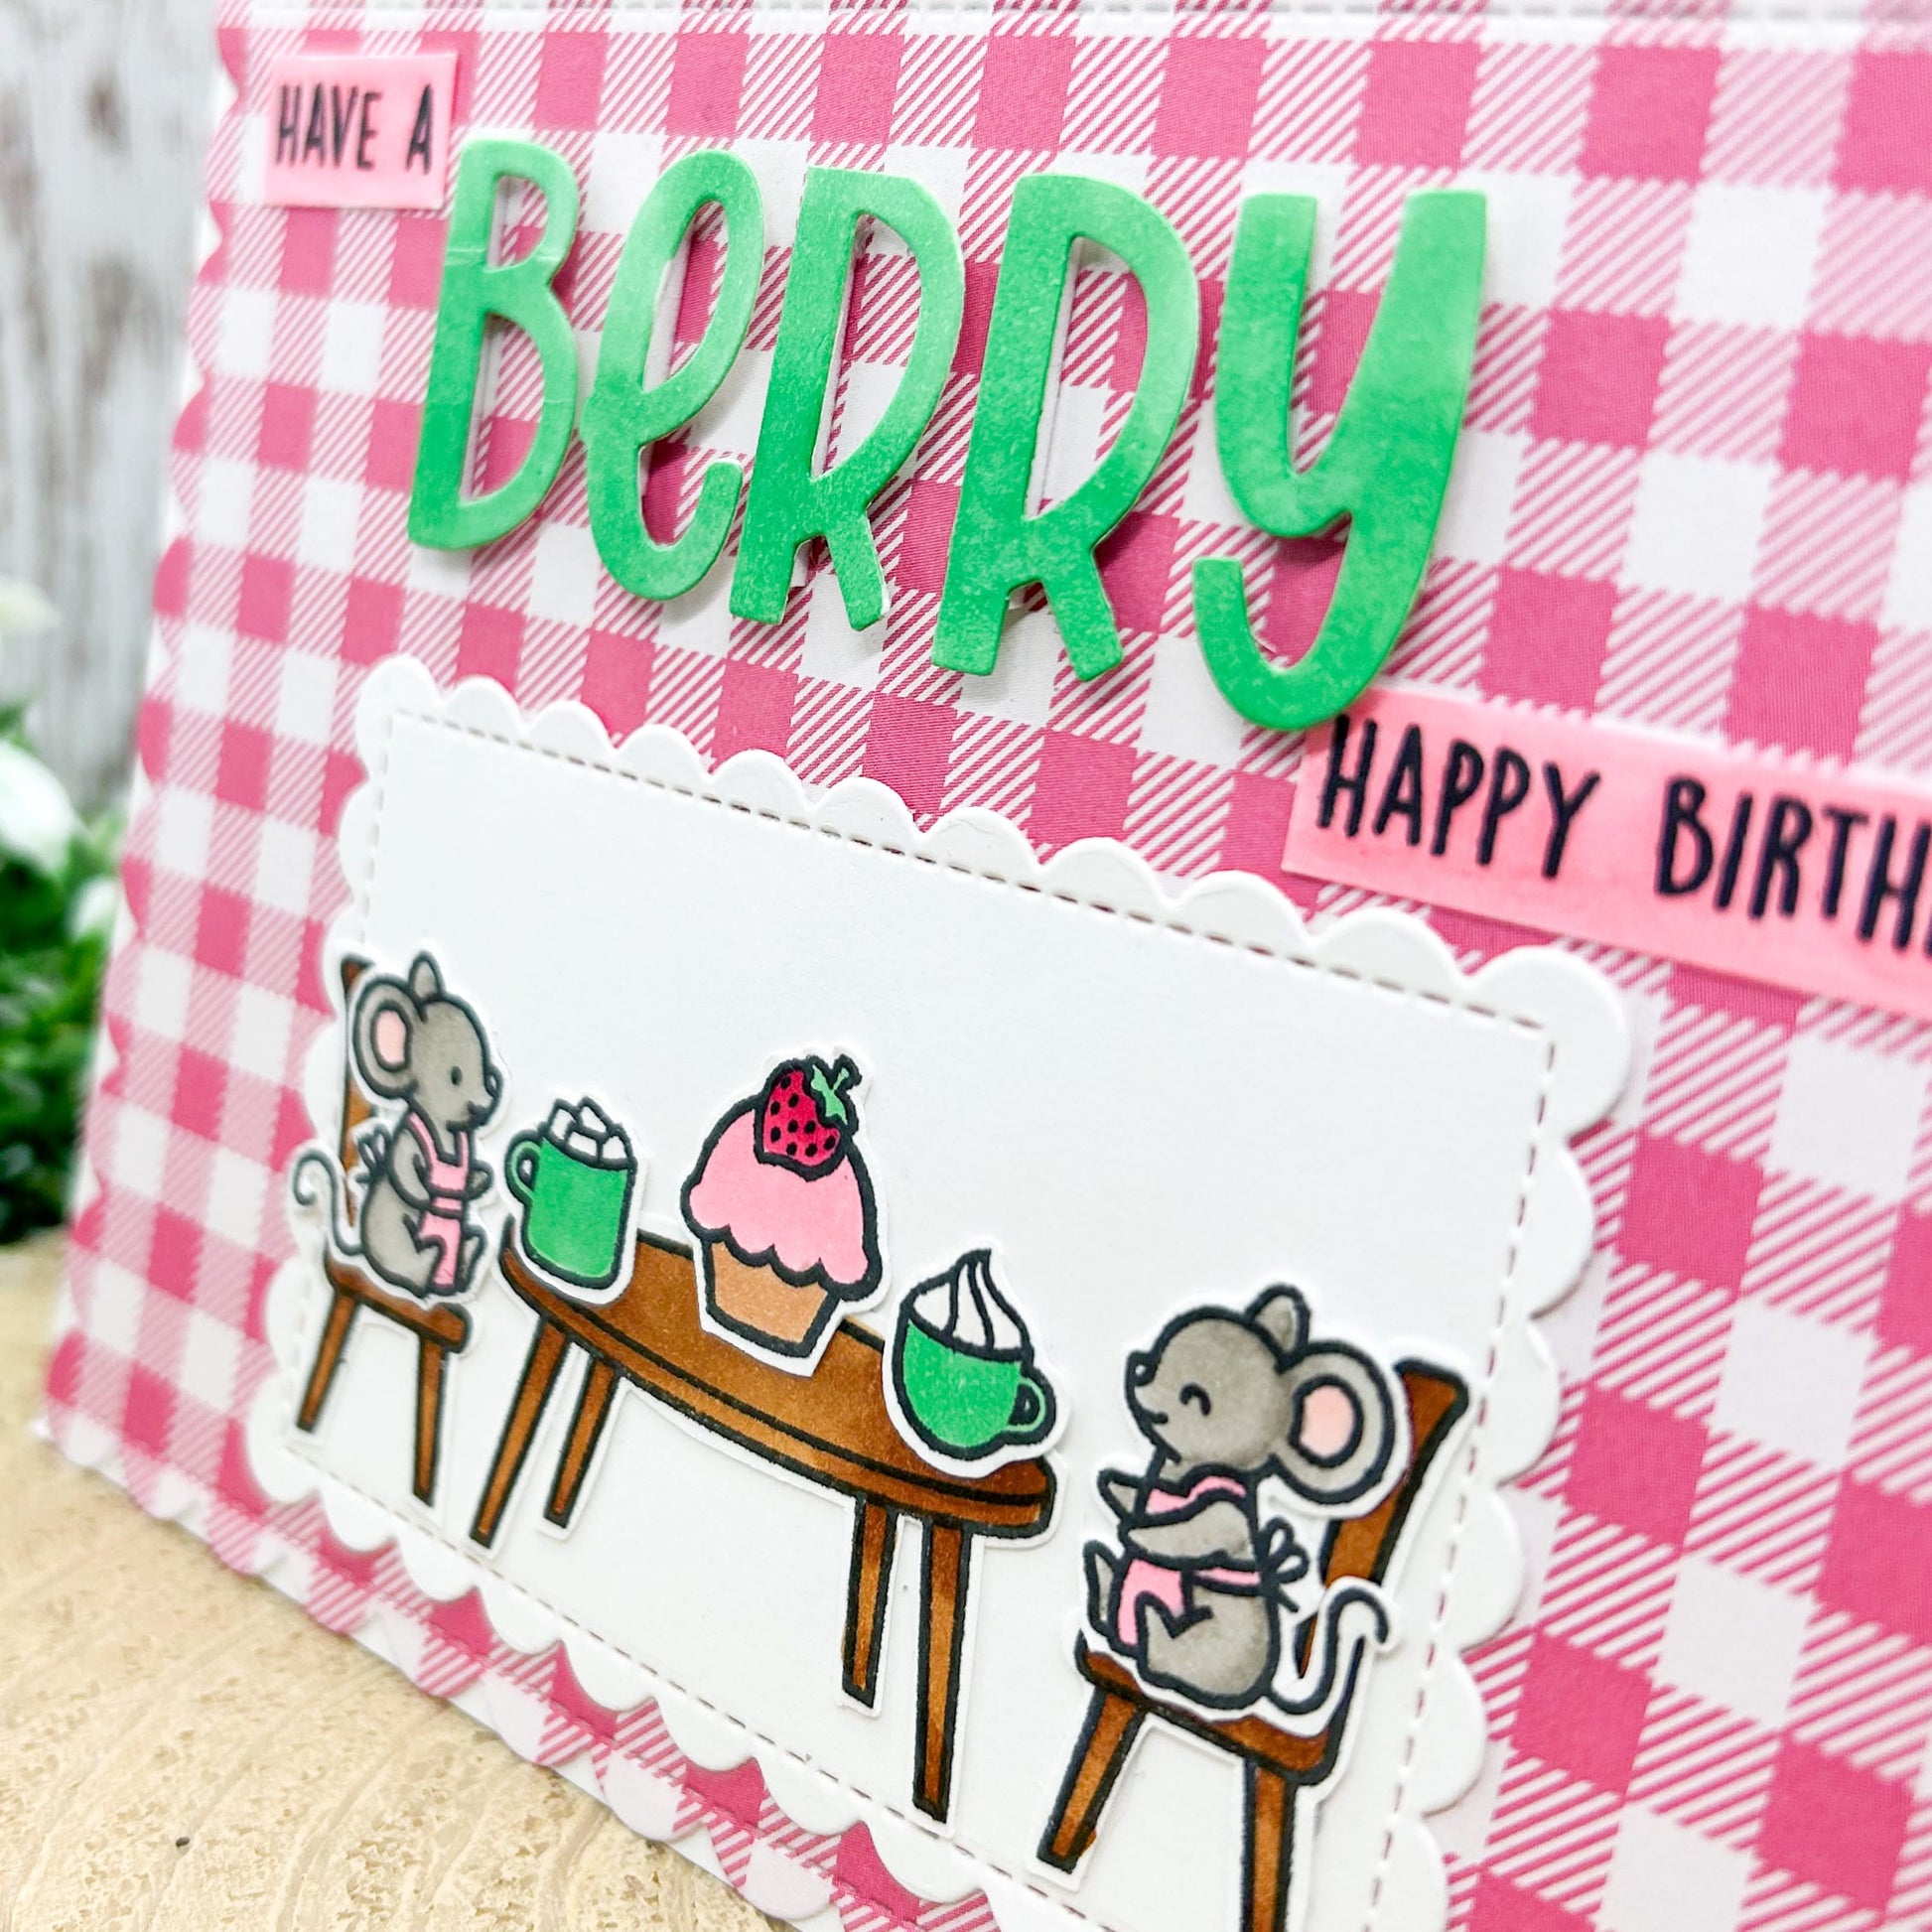 Have A Berry Happy Birthday Handmade Card-2